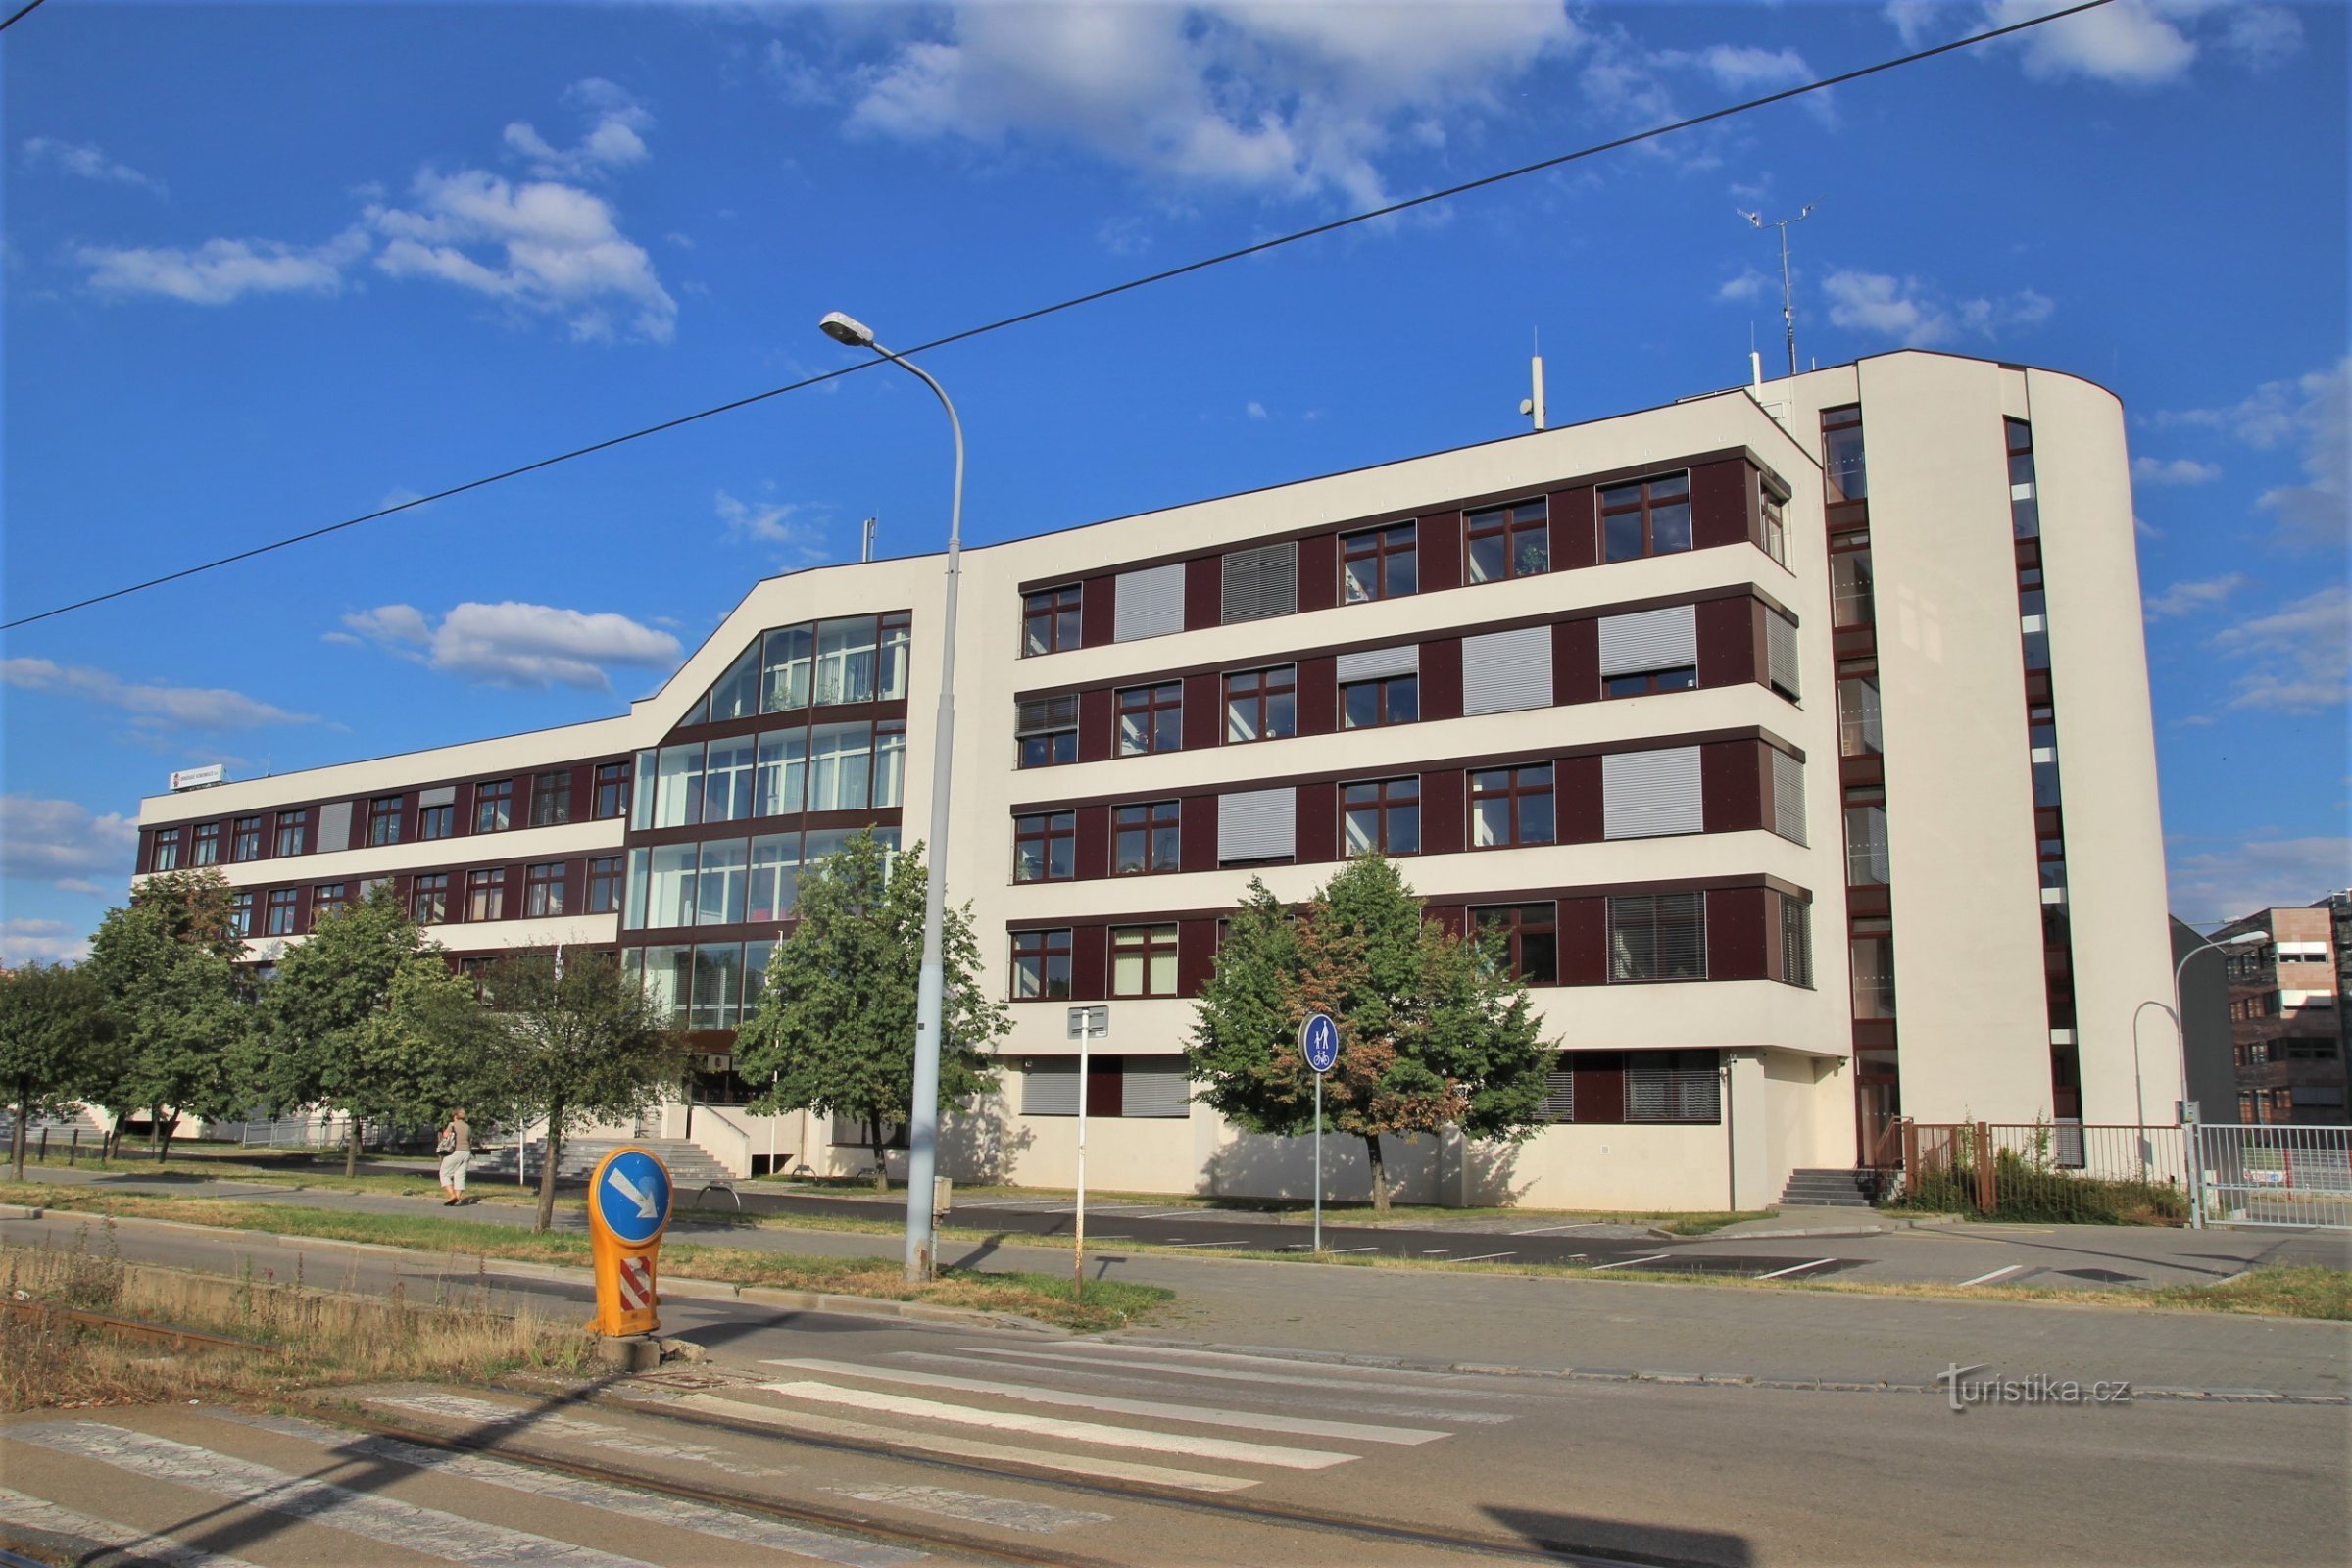 Brno Communications Building